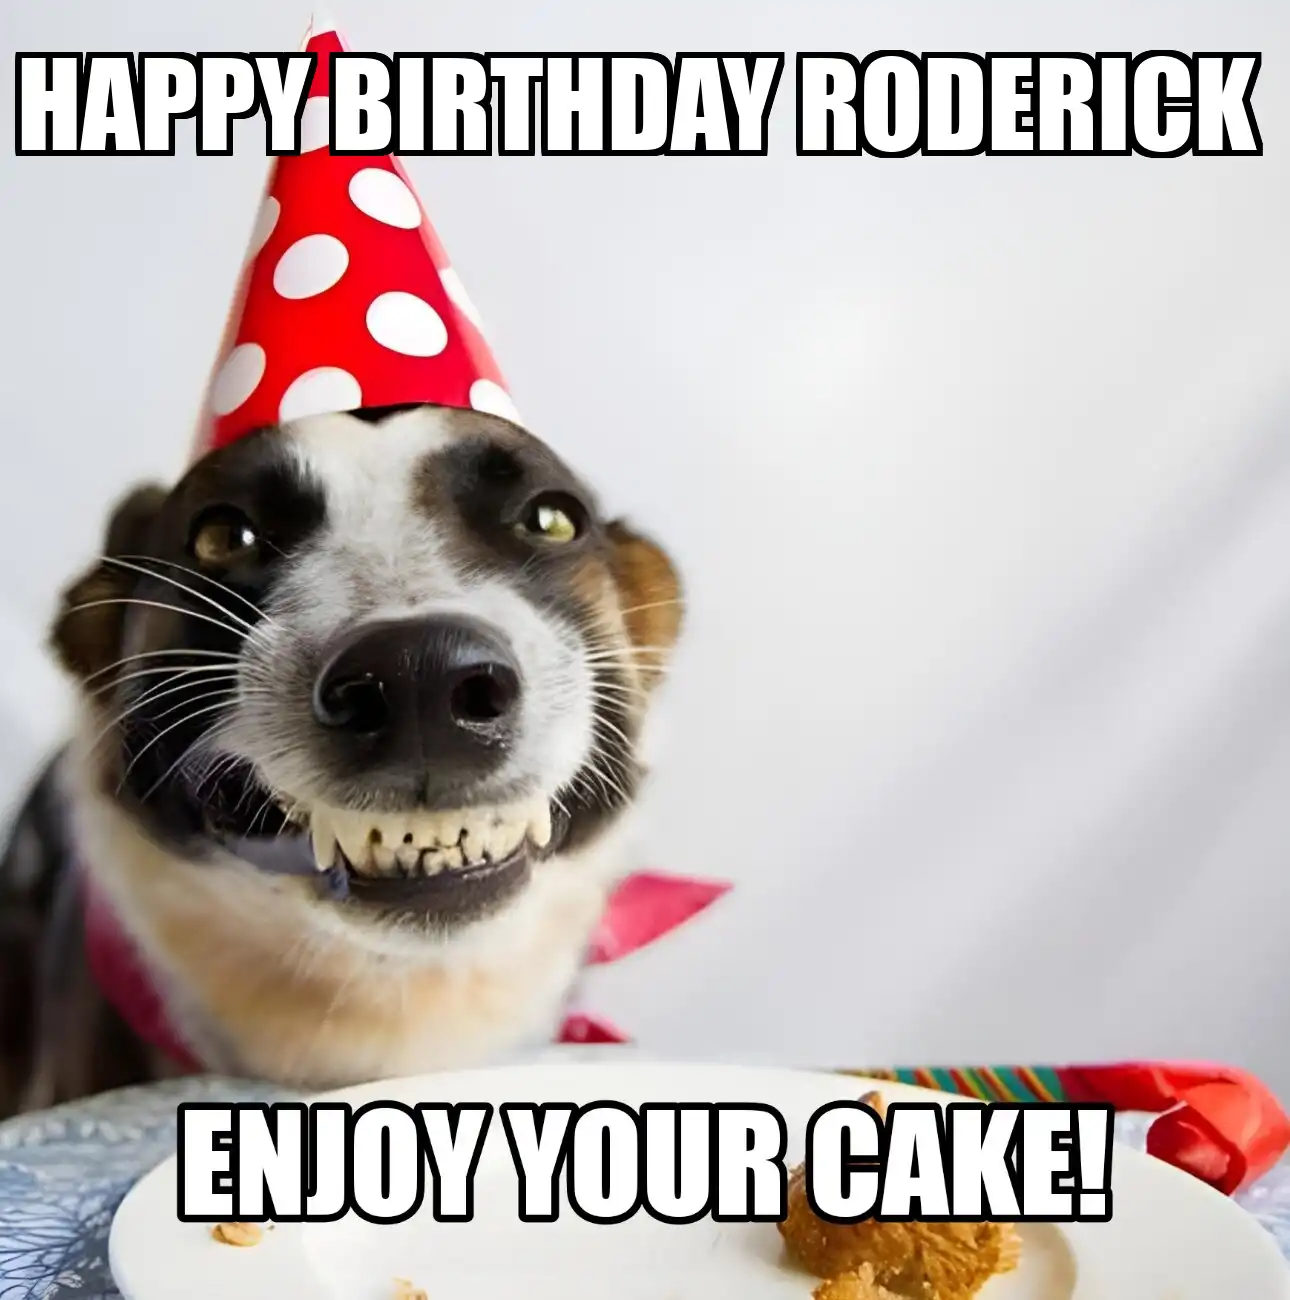 Happy Birthday Roderick Enjoy Your Cake Dog Meme